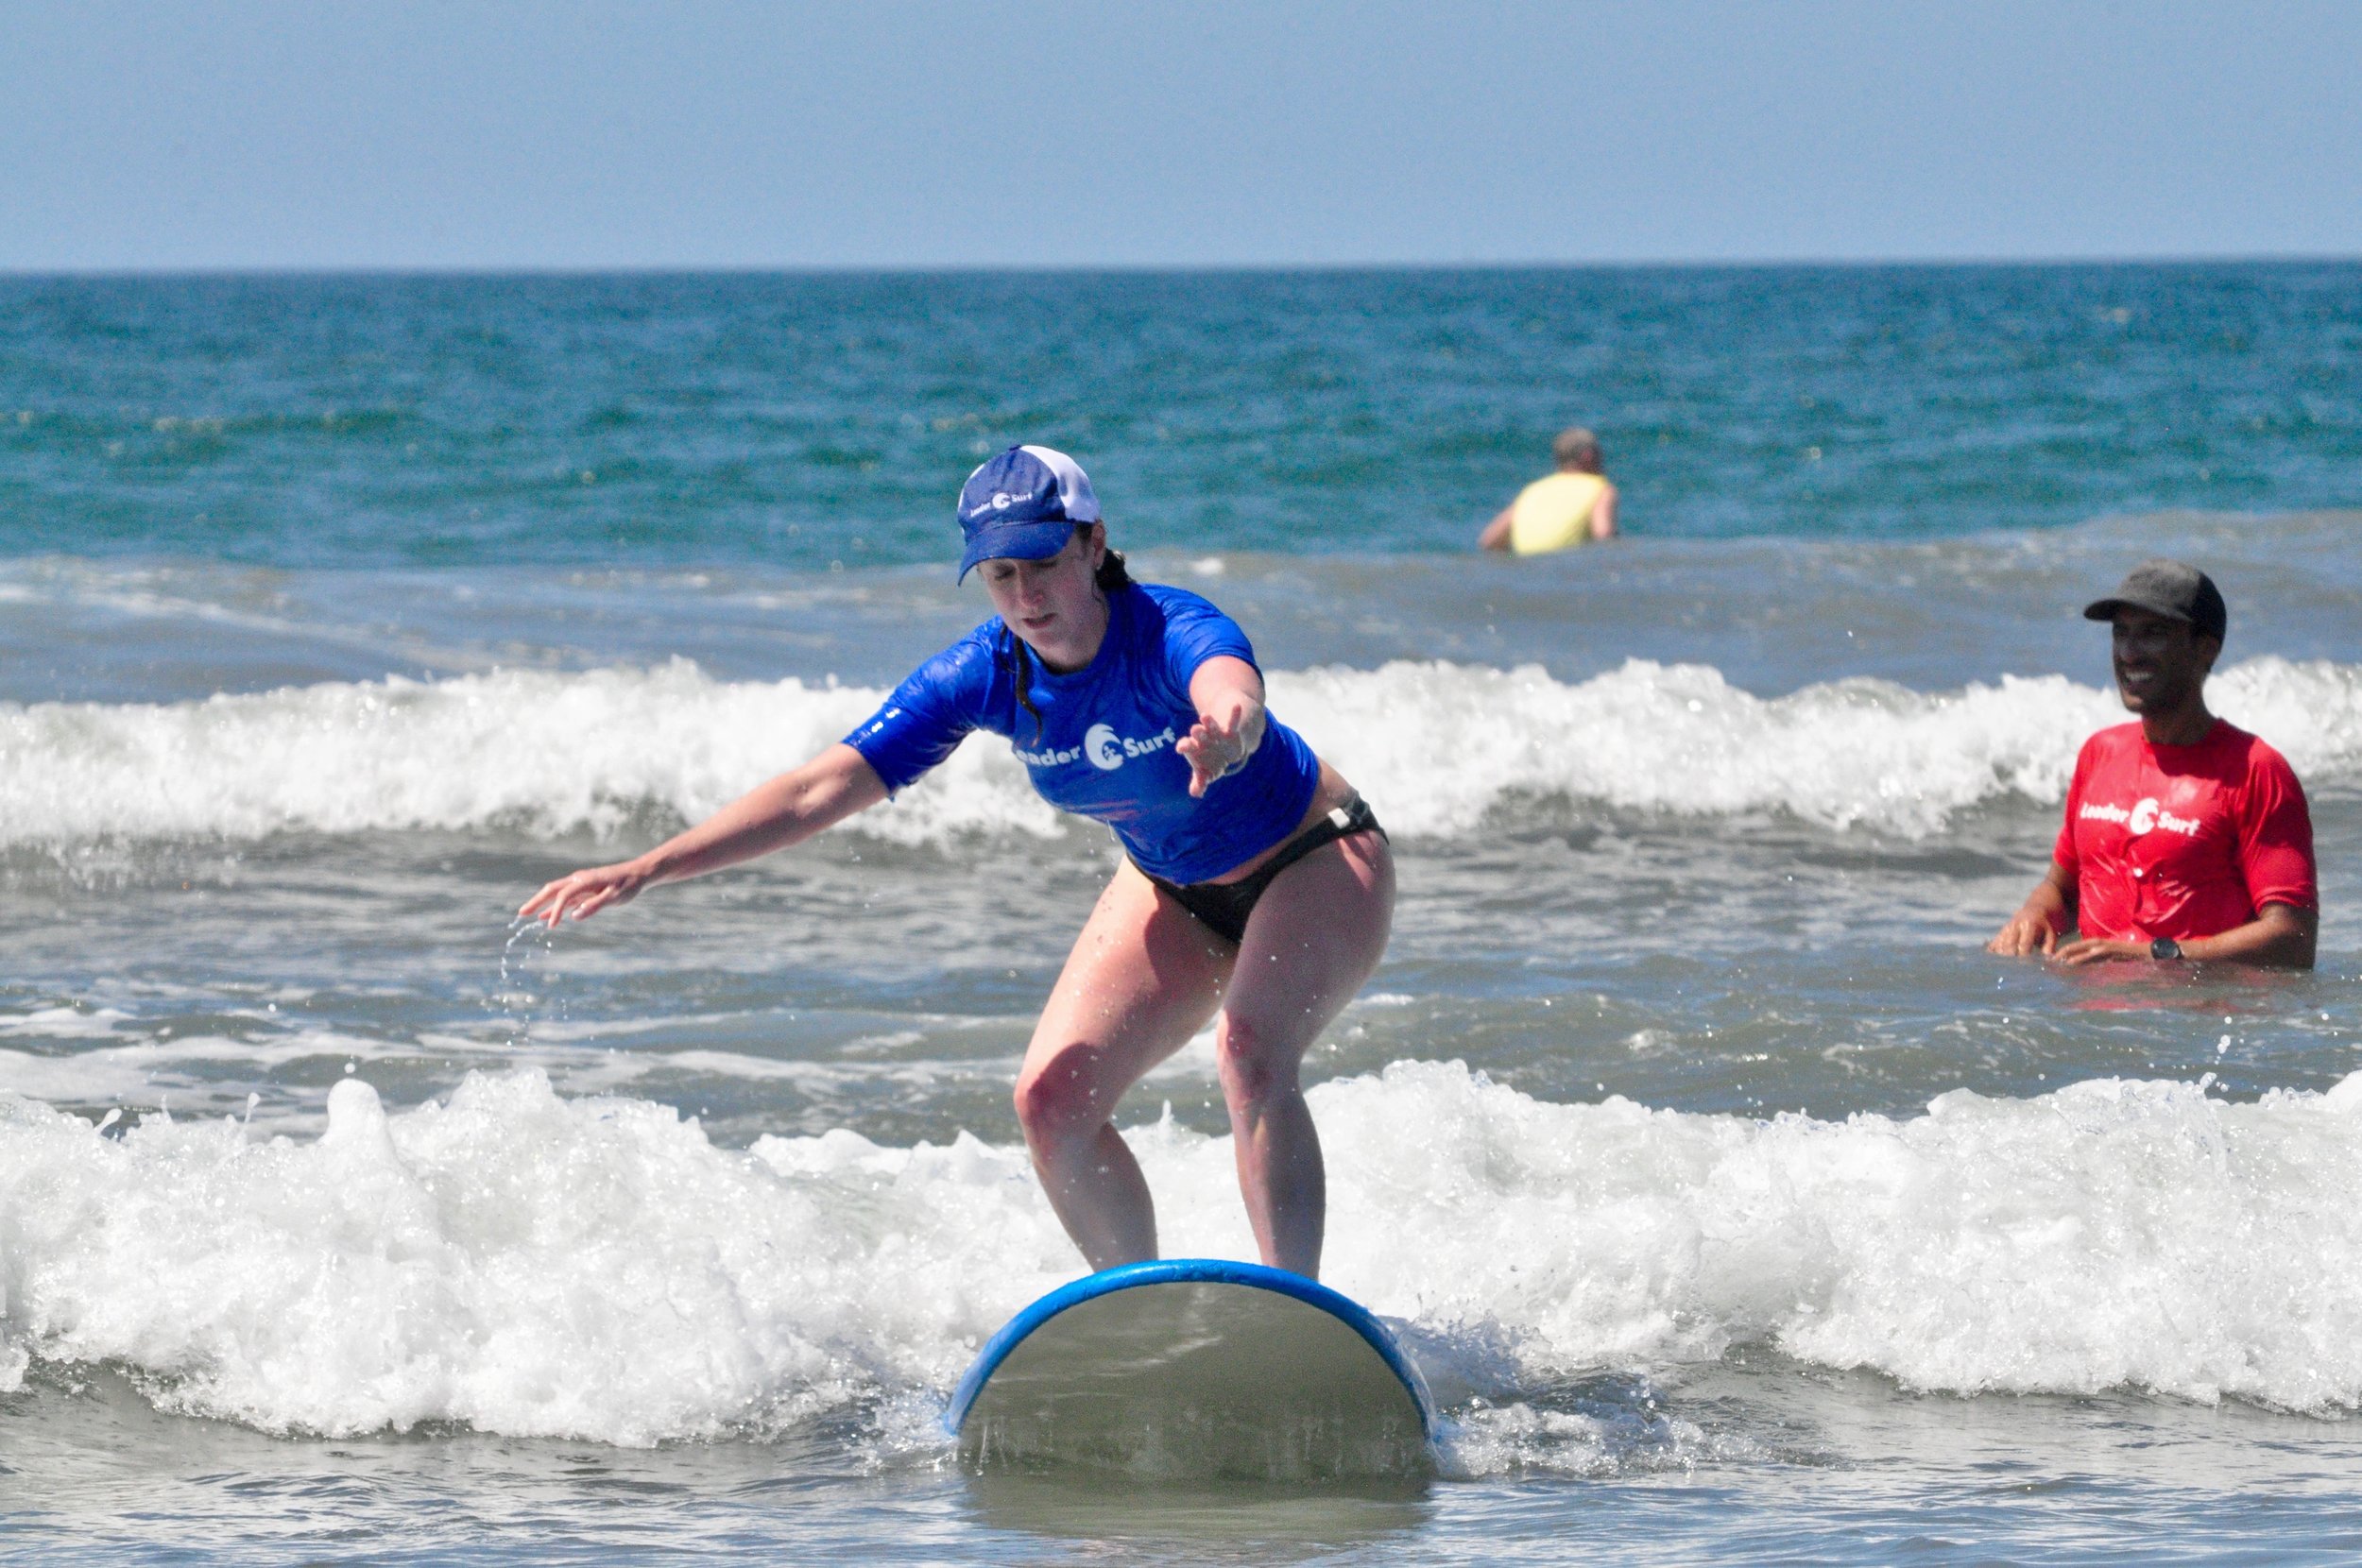 Diana Riding a wave